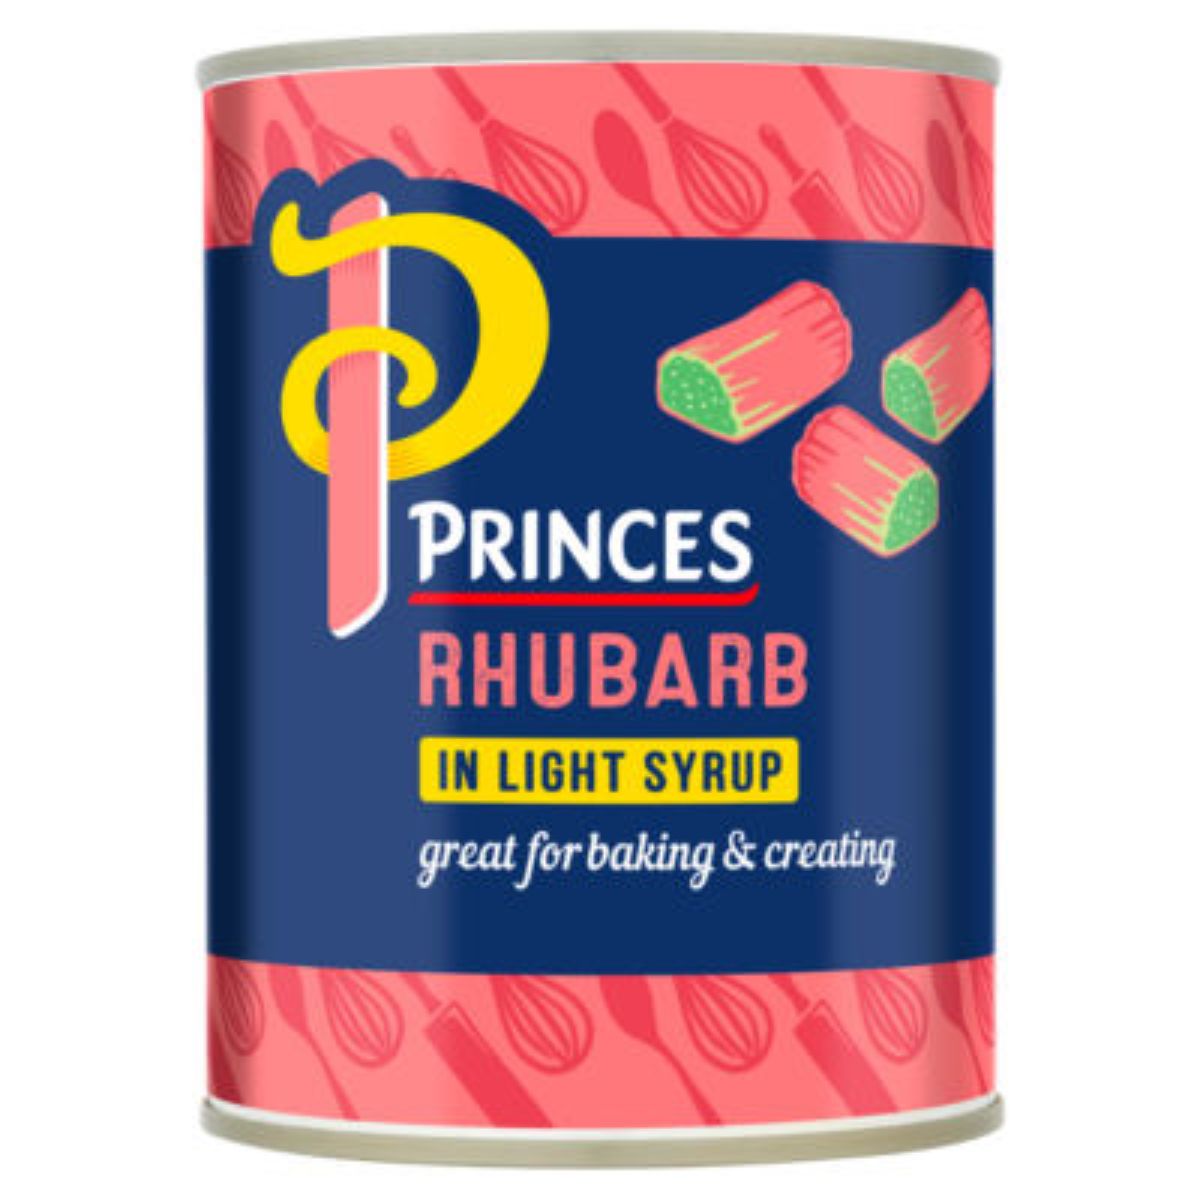 Princes - Rhubarb in Light Syrup - 540g.